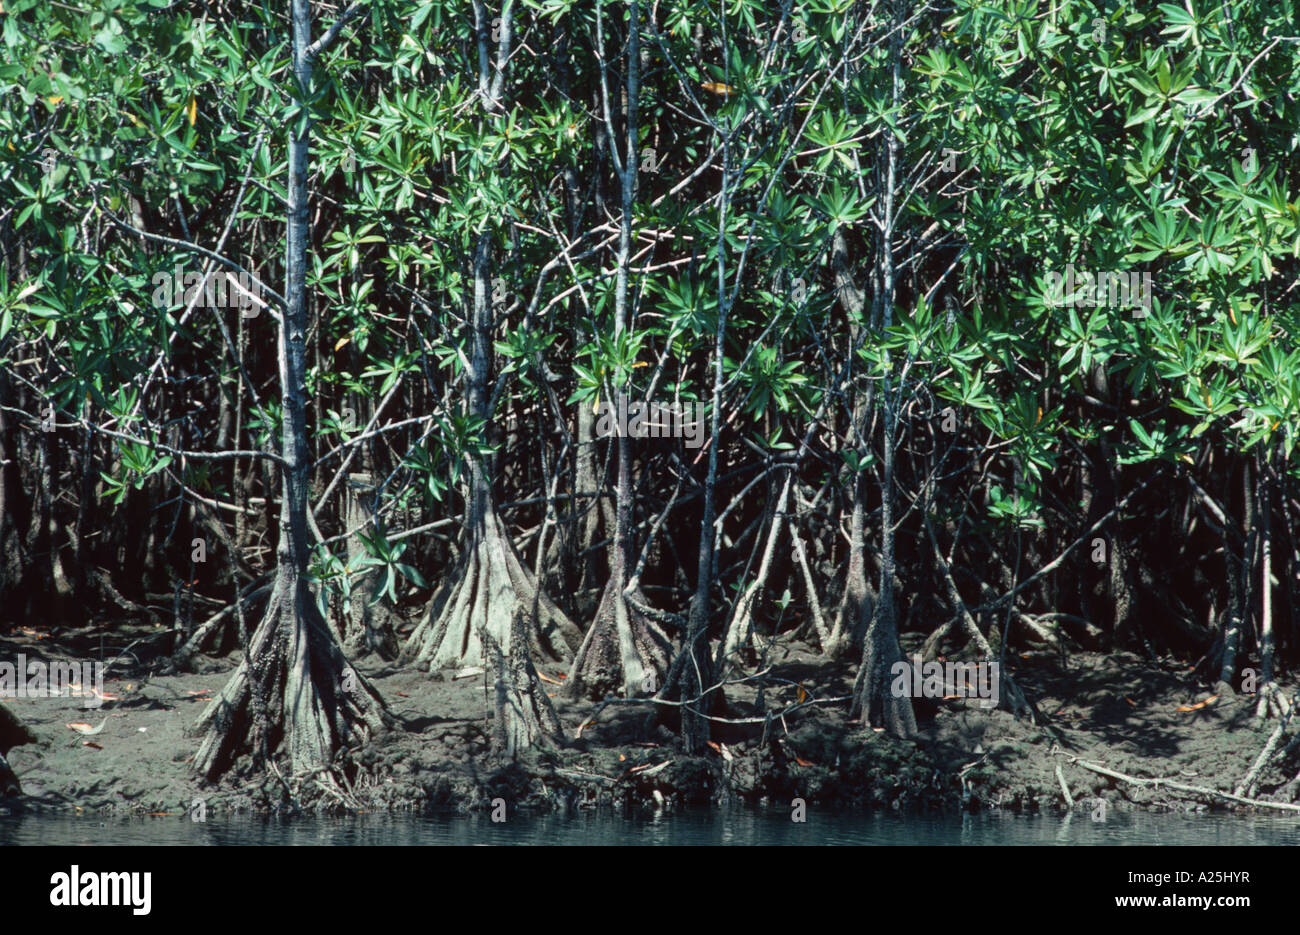 Tee mangrove -Fotos und -Bildmaterial in hoher Auflösung – Alamy